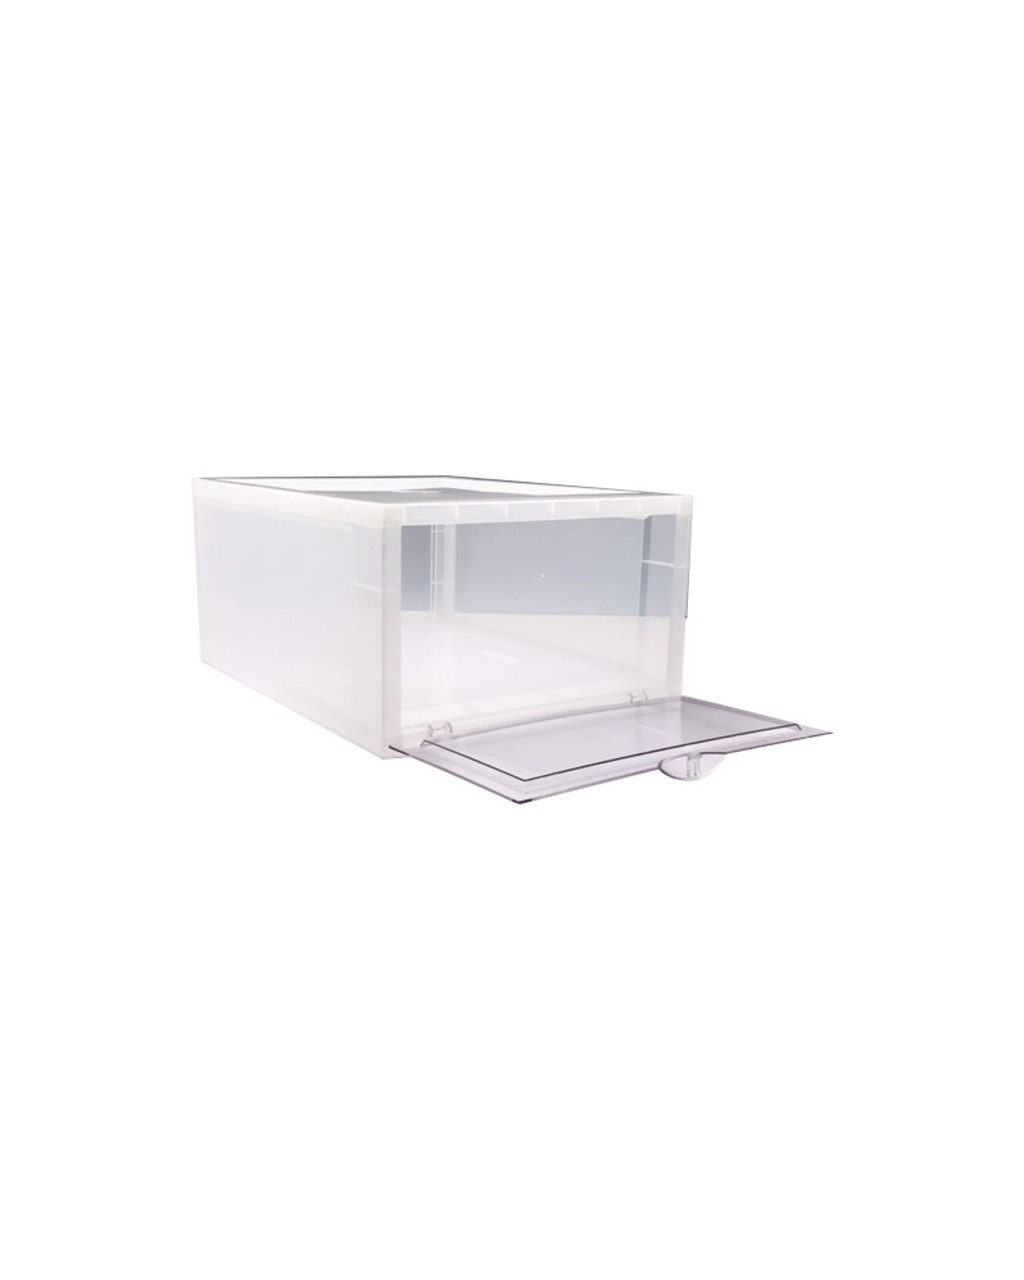 Clear Shoe Box - Storage Box, Display Box (99478)